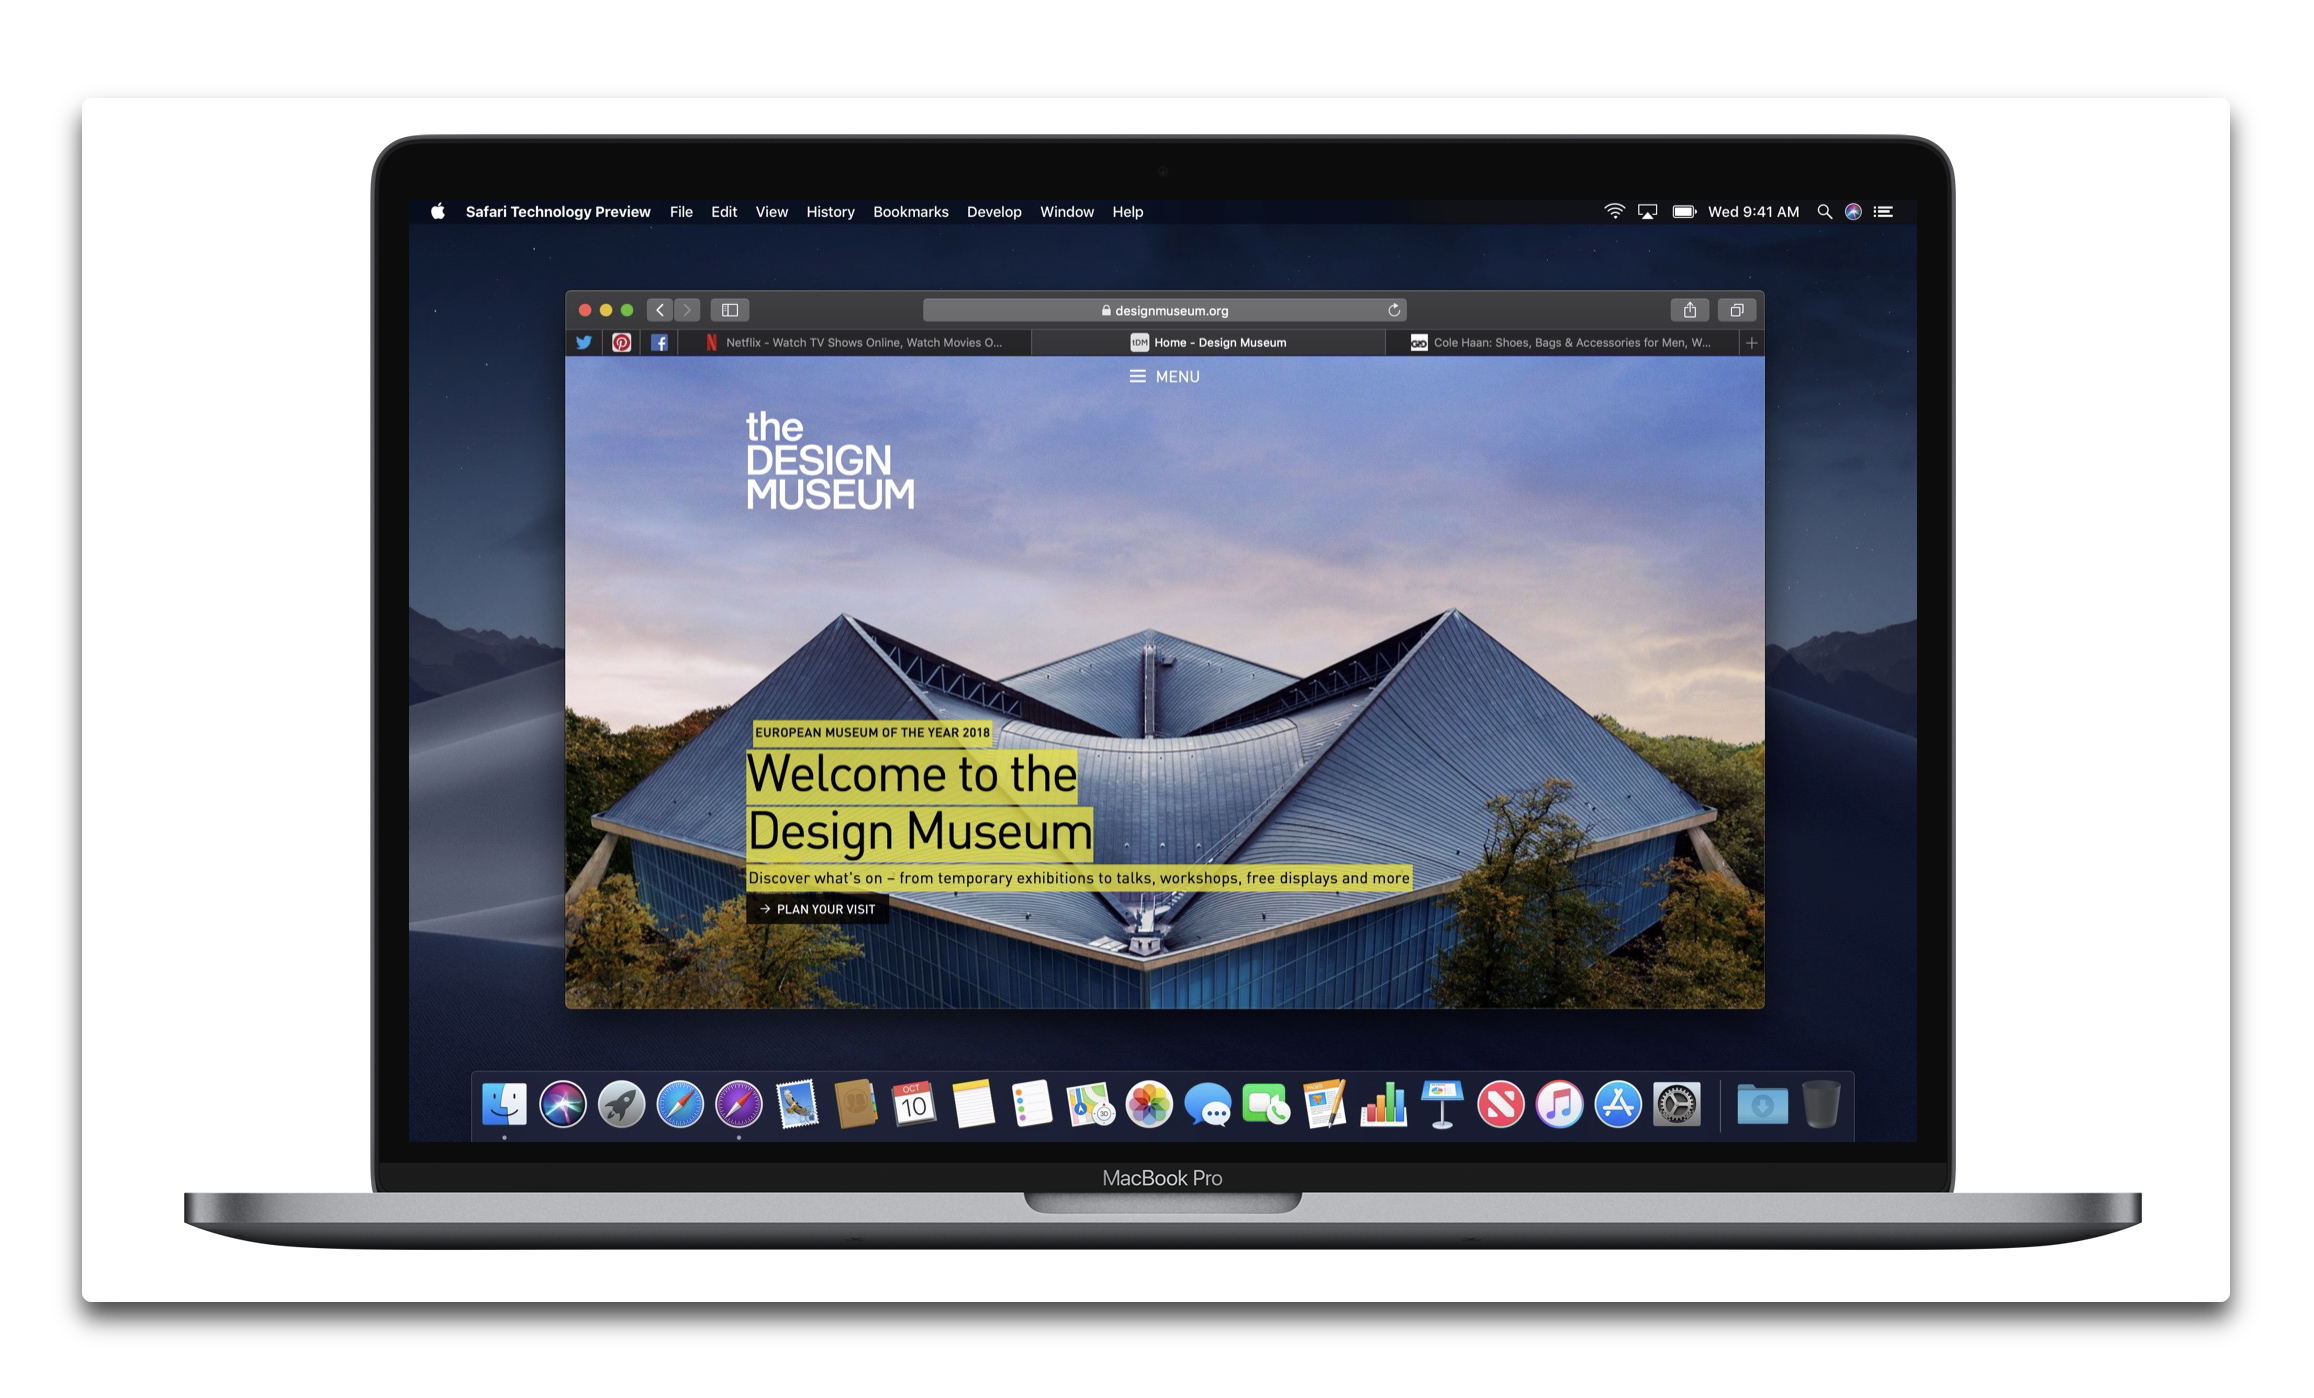 【Mac】Apple，「Safari Technology Preview Release 77」を開発者にリリース